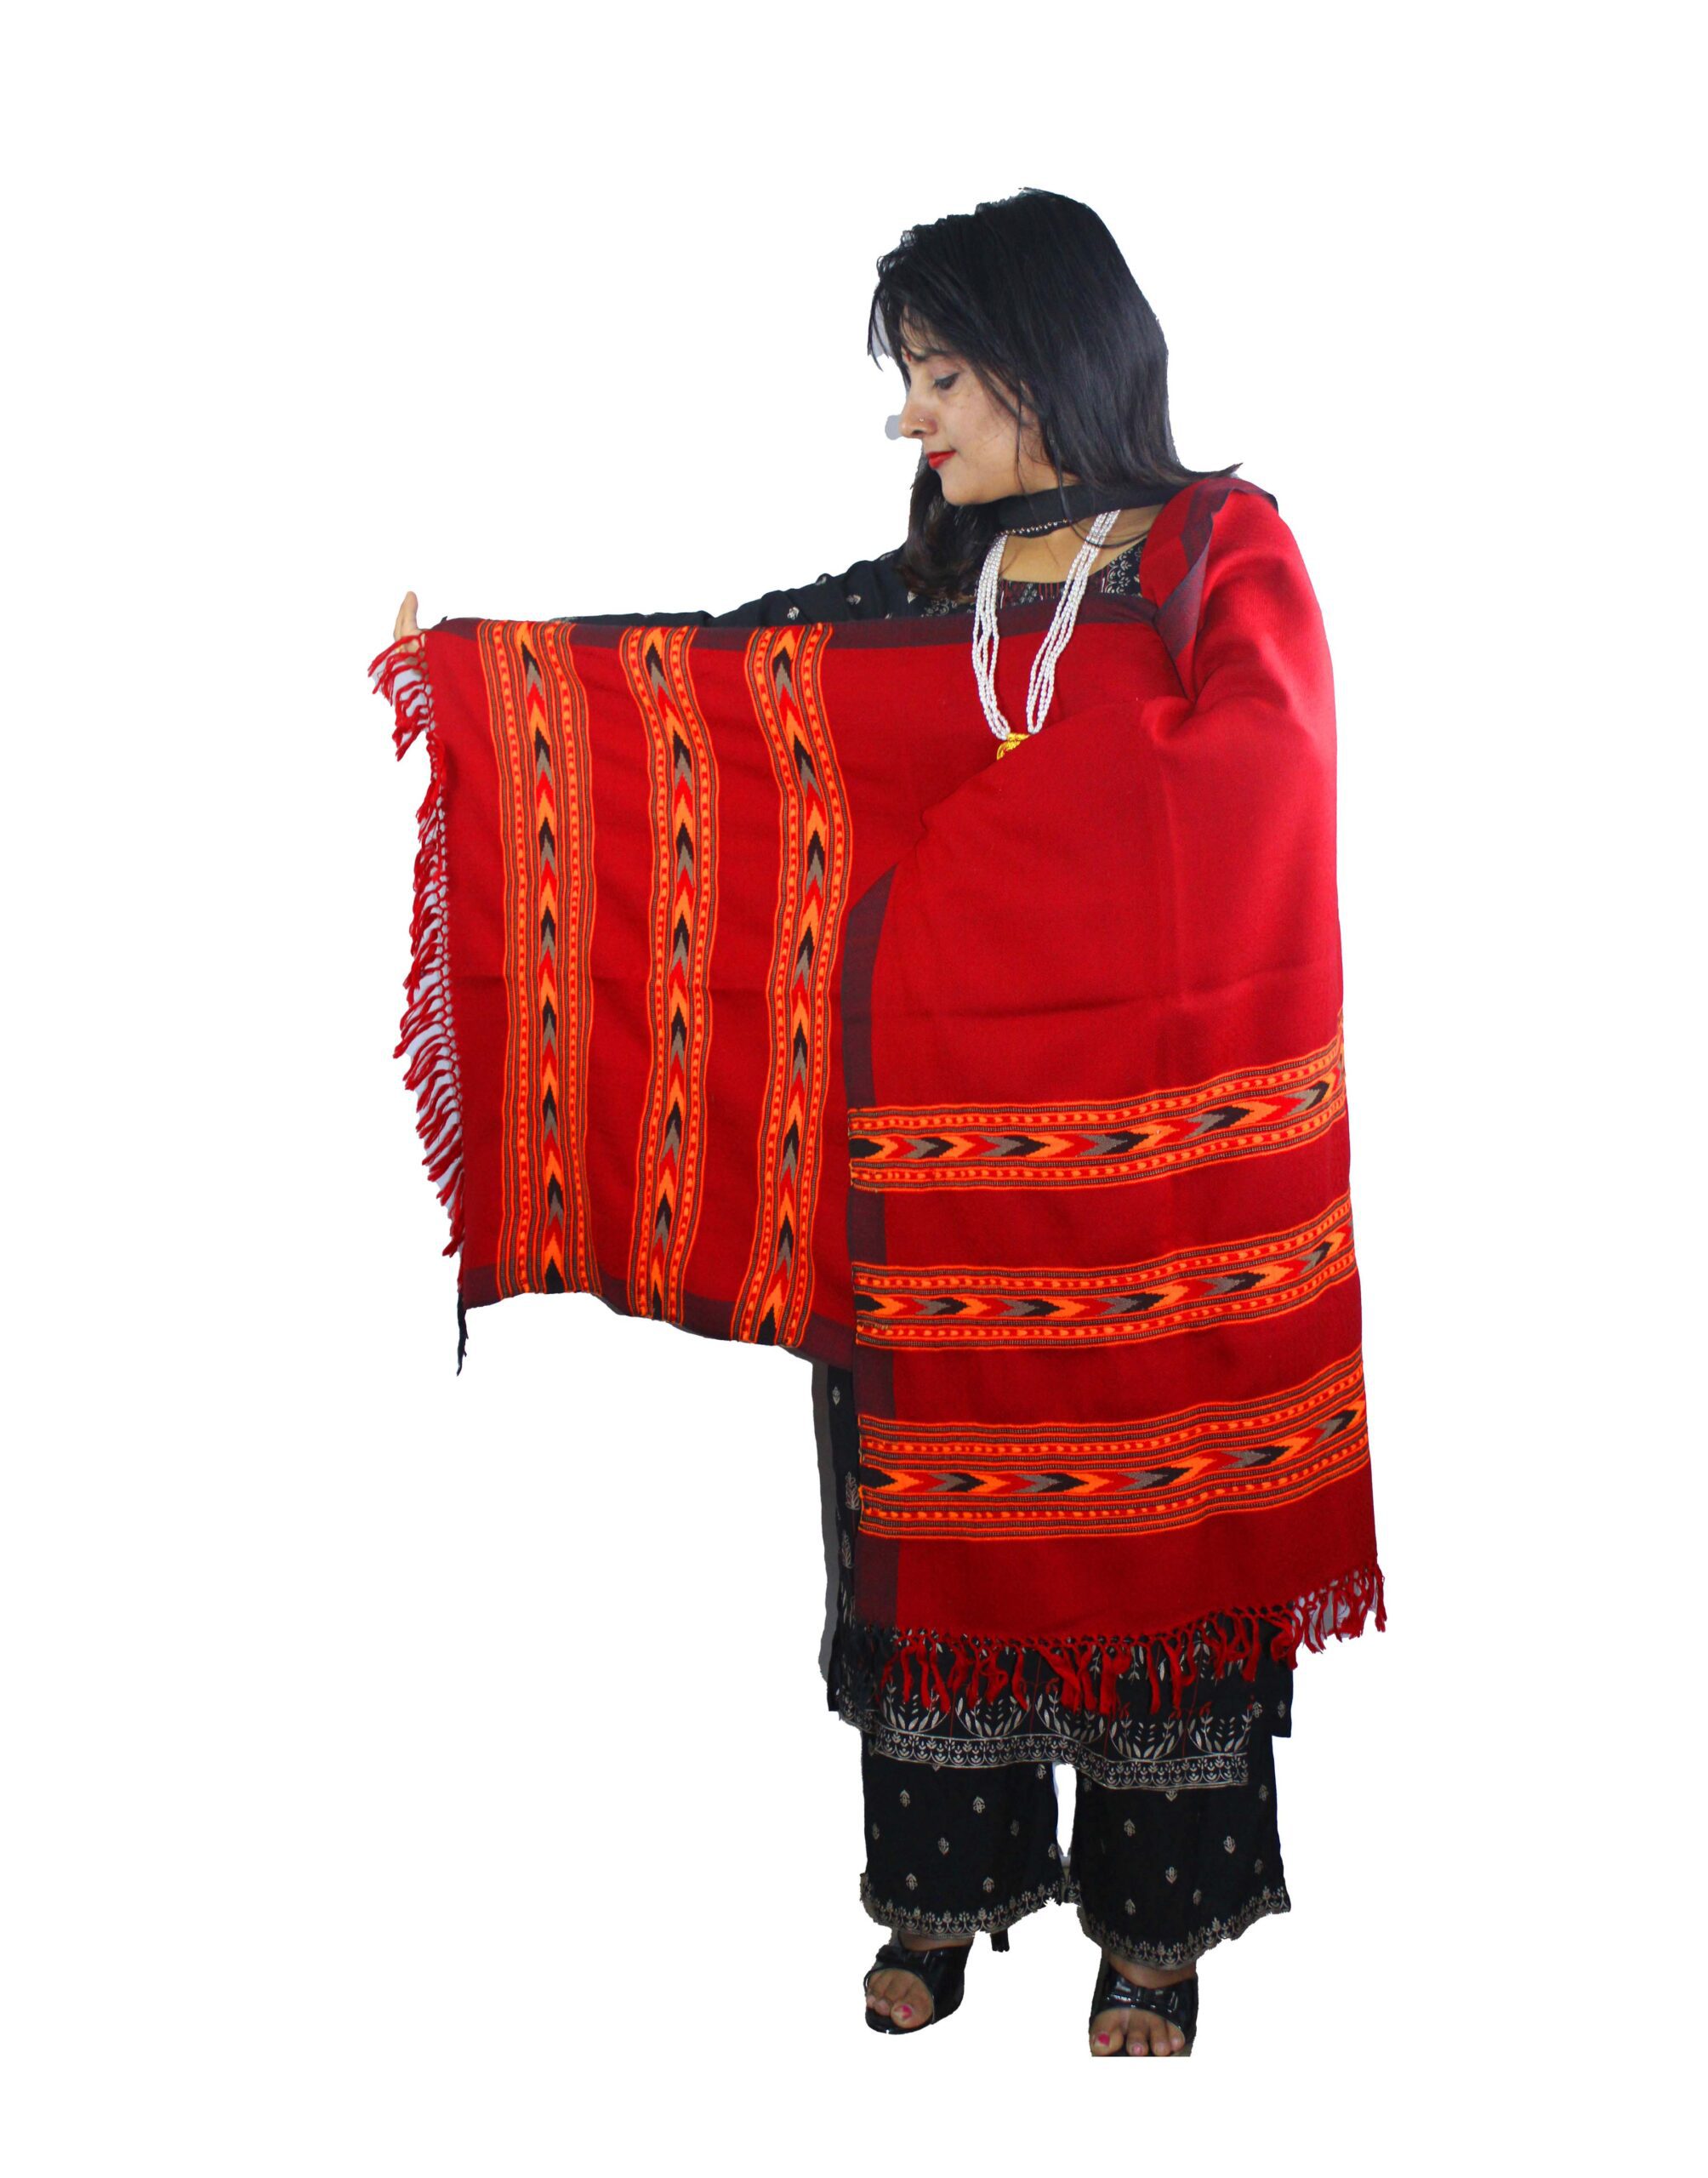 Kullu, Manali traditional dress - Himachal Photo Gallery